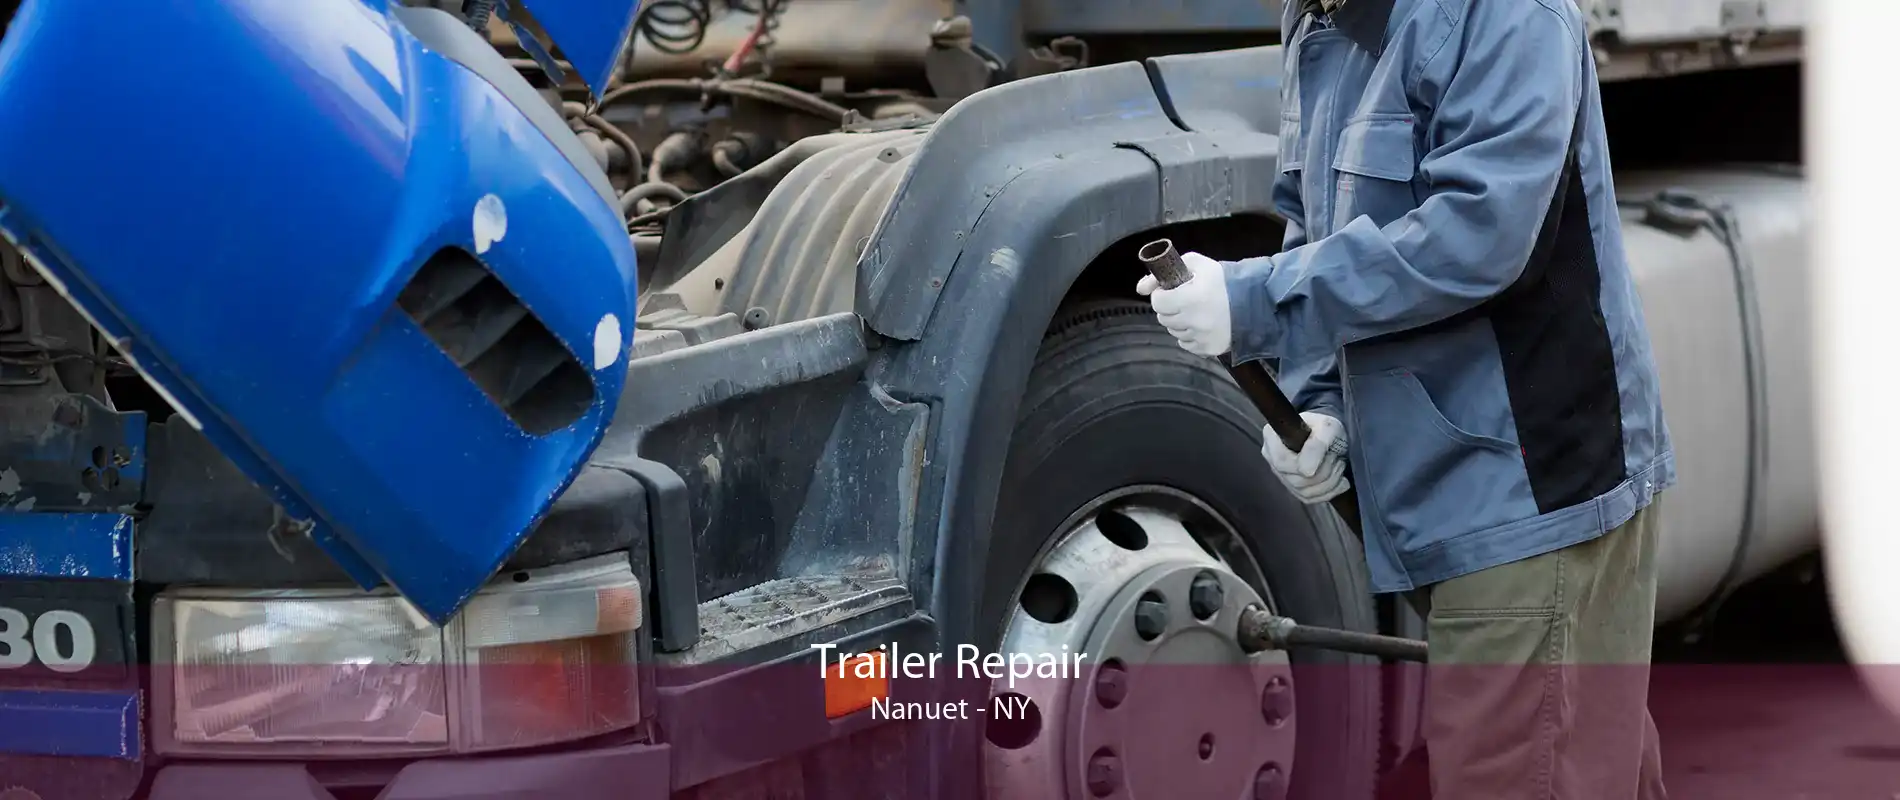 Trailer Repair Nanuet - NY